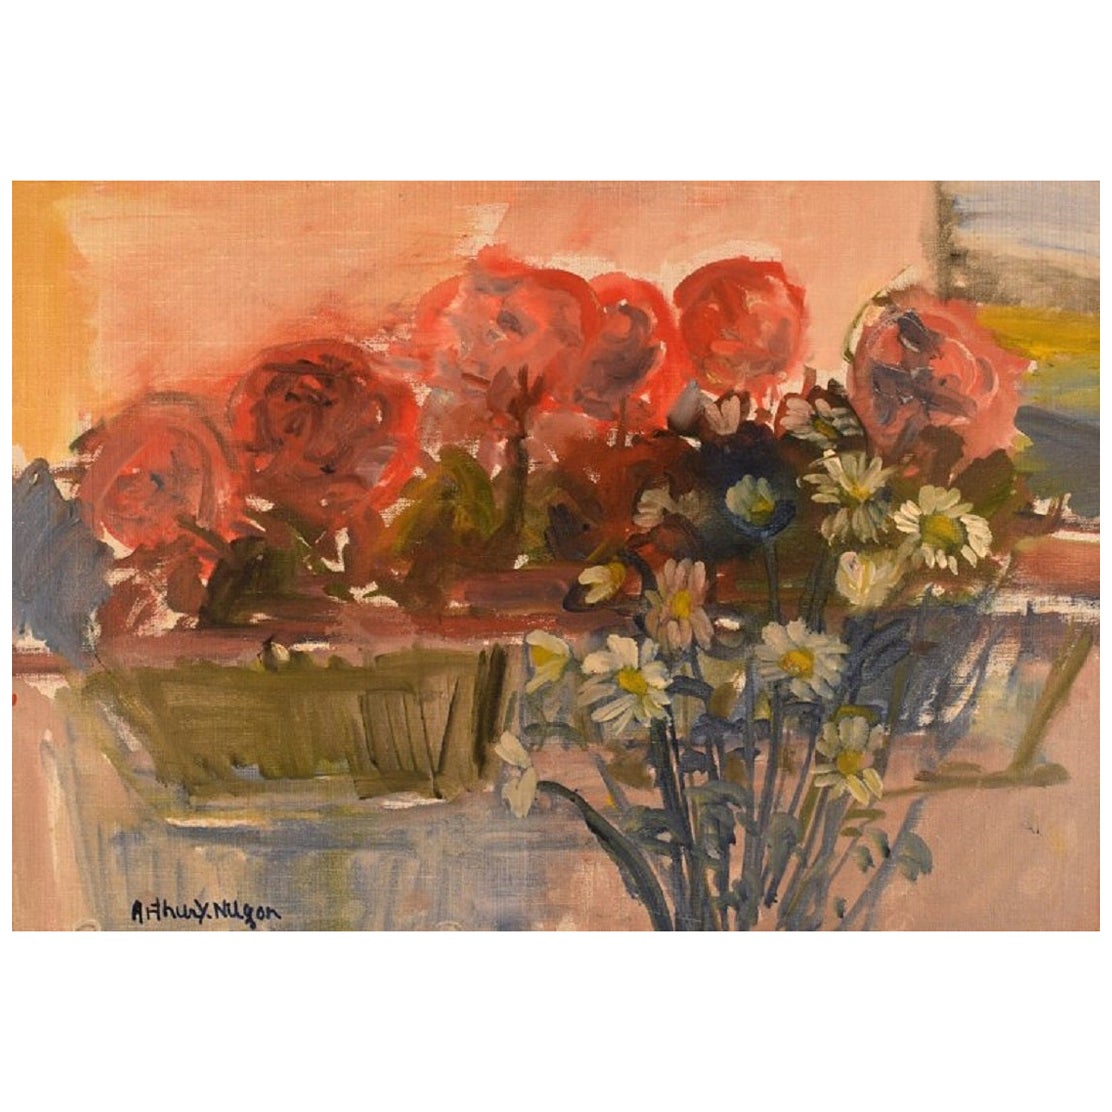 Arthur Y. Nilsson, listed Swedish artist. Oil/ canvas. Arrangement with flowers